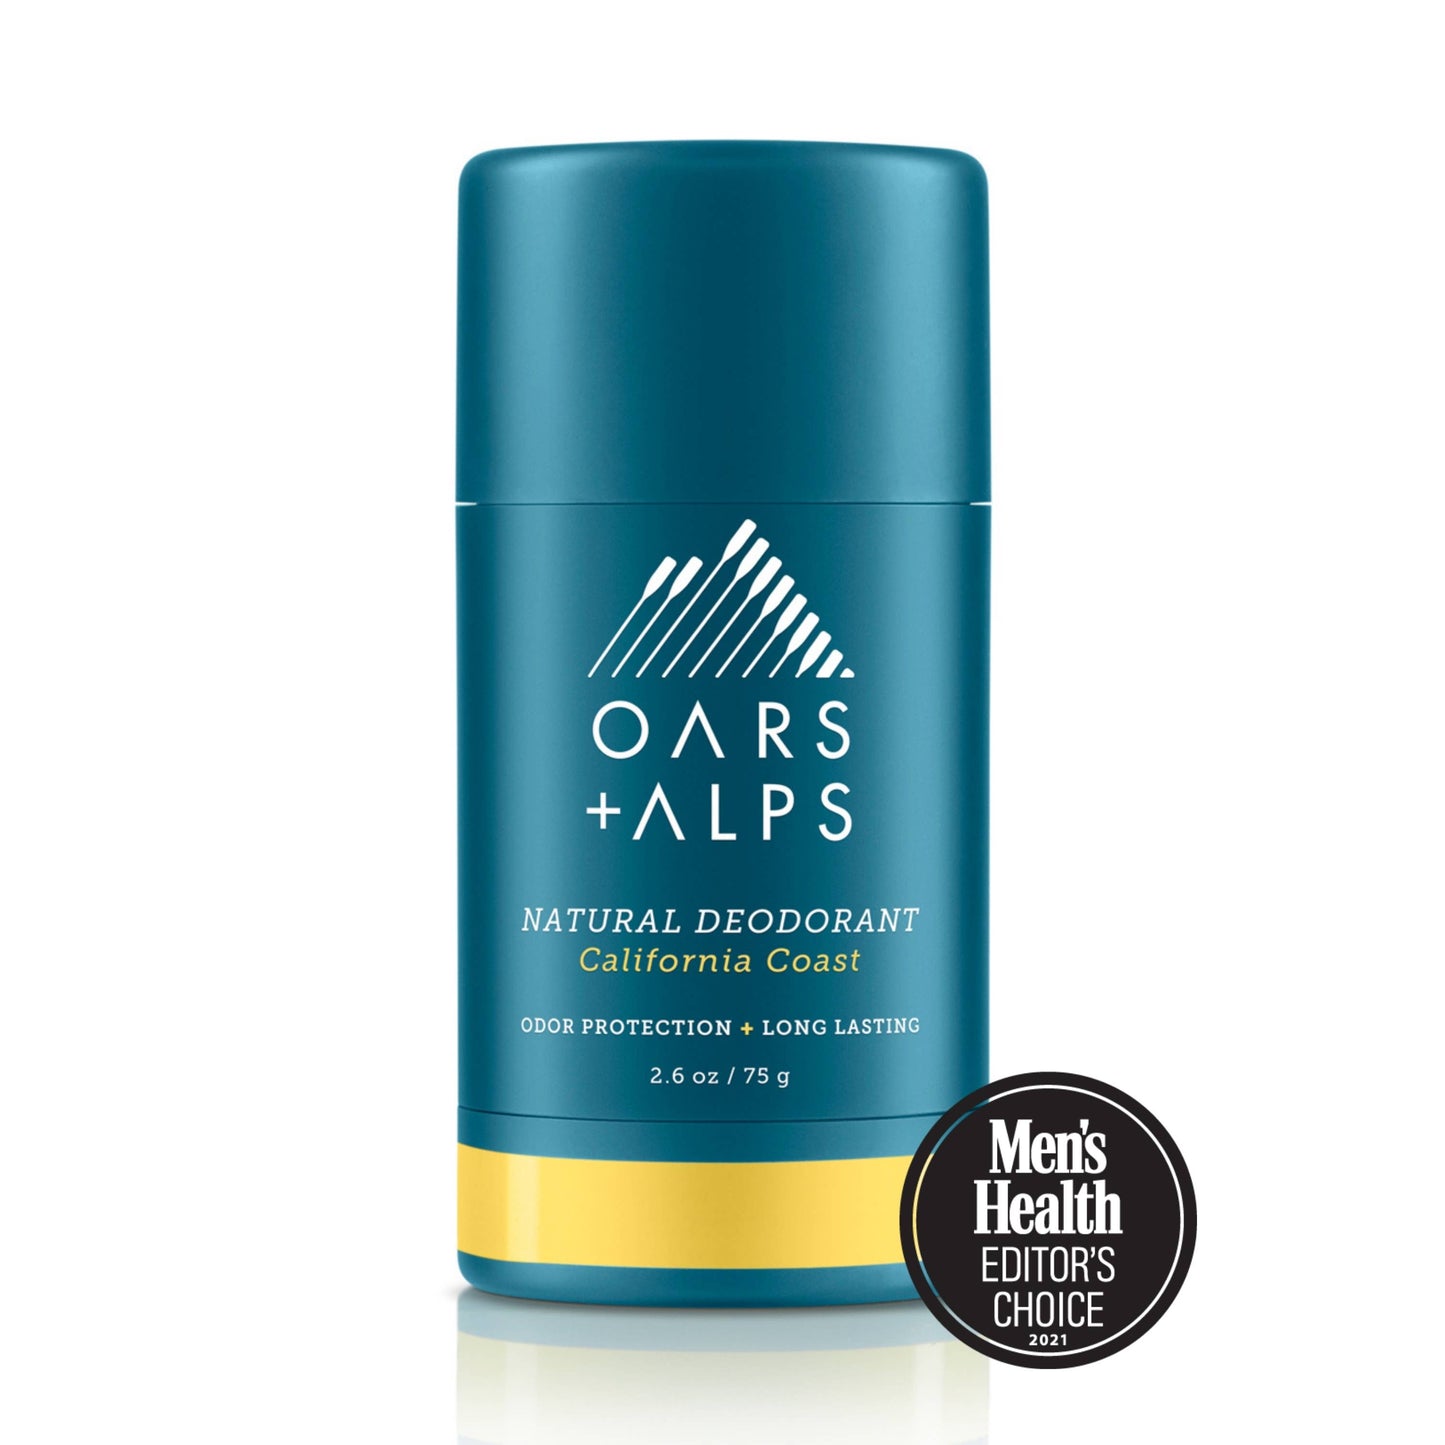 Oars and Alps - Aluminum Free Deodorant, Clean Ingredients, Cali Coast